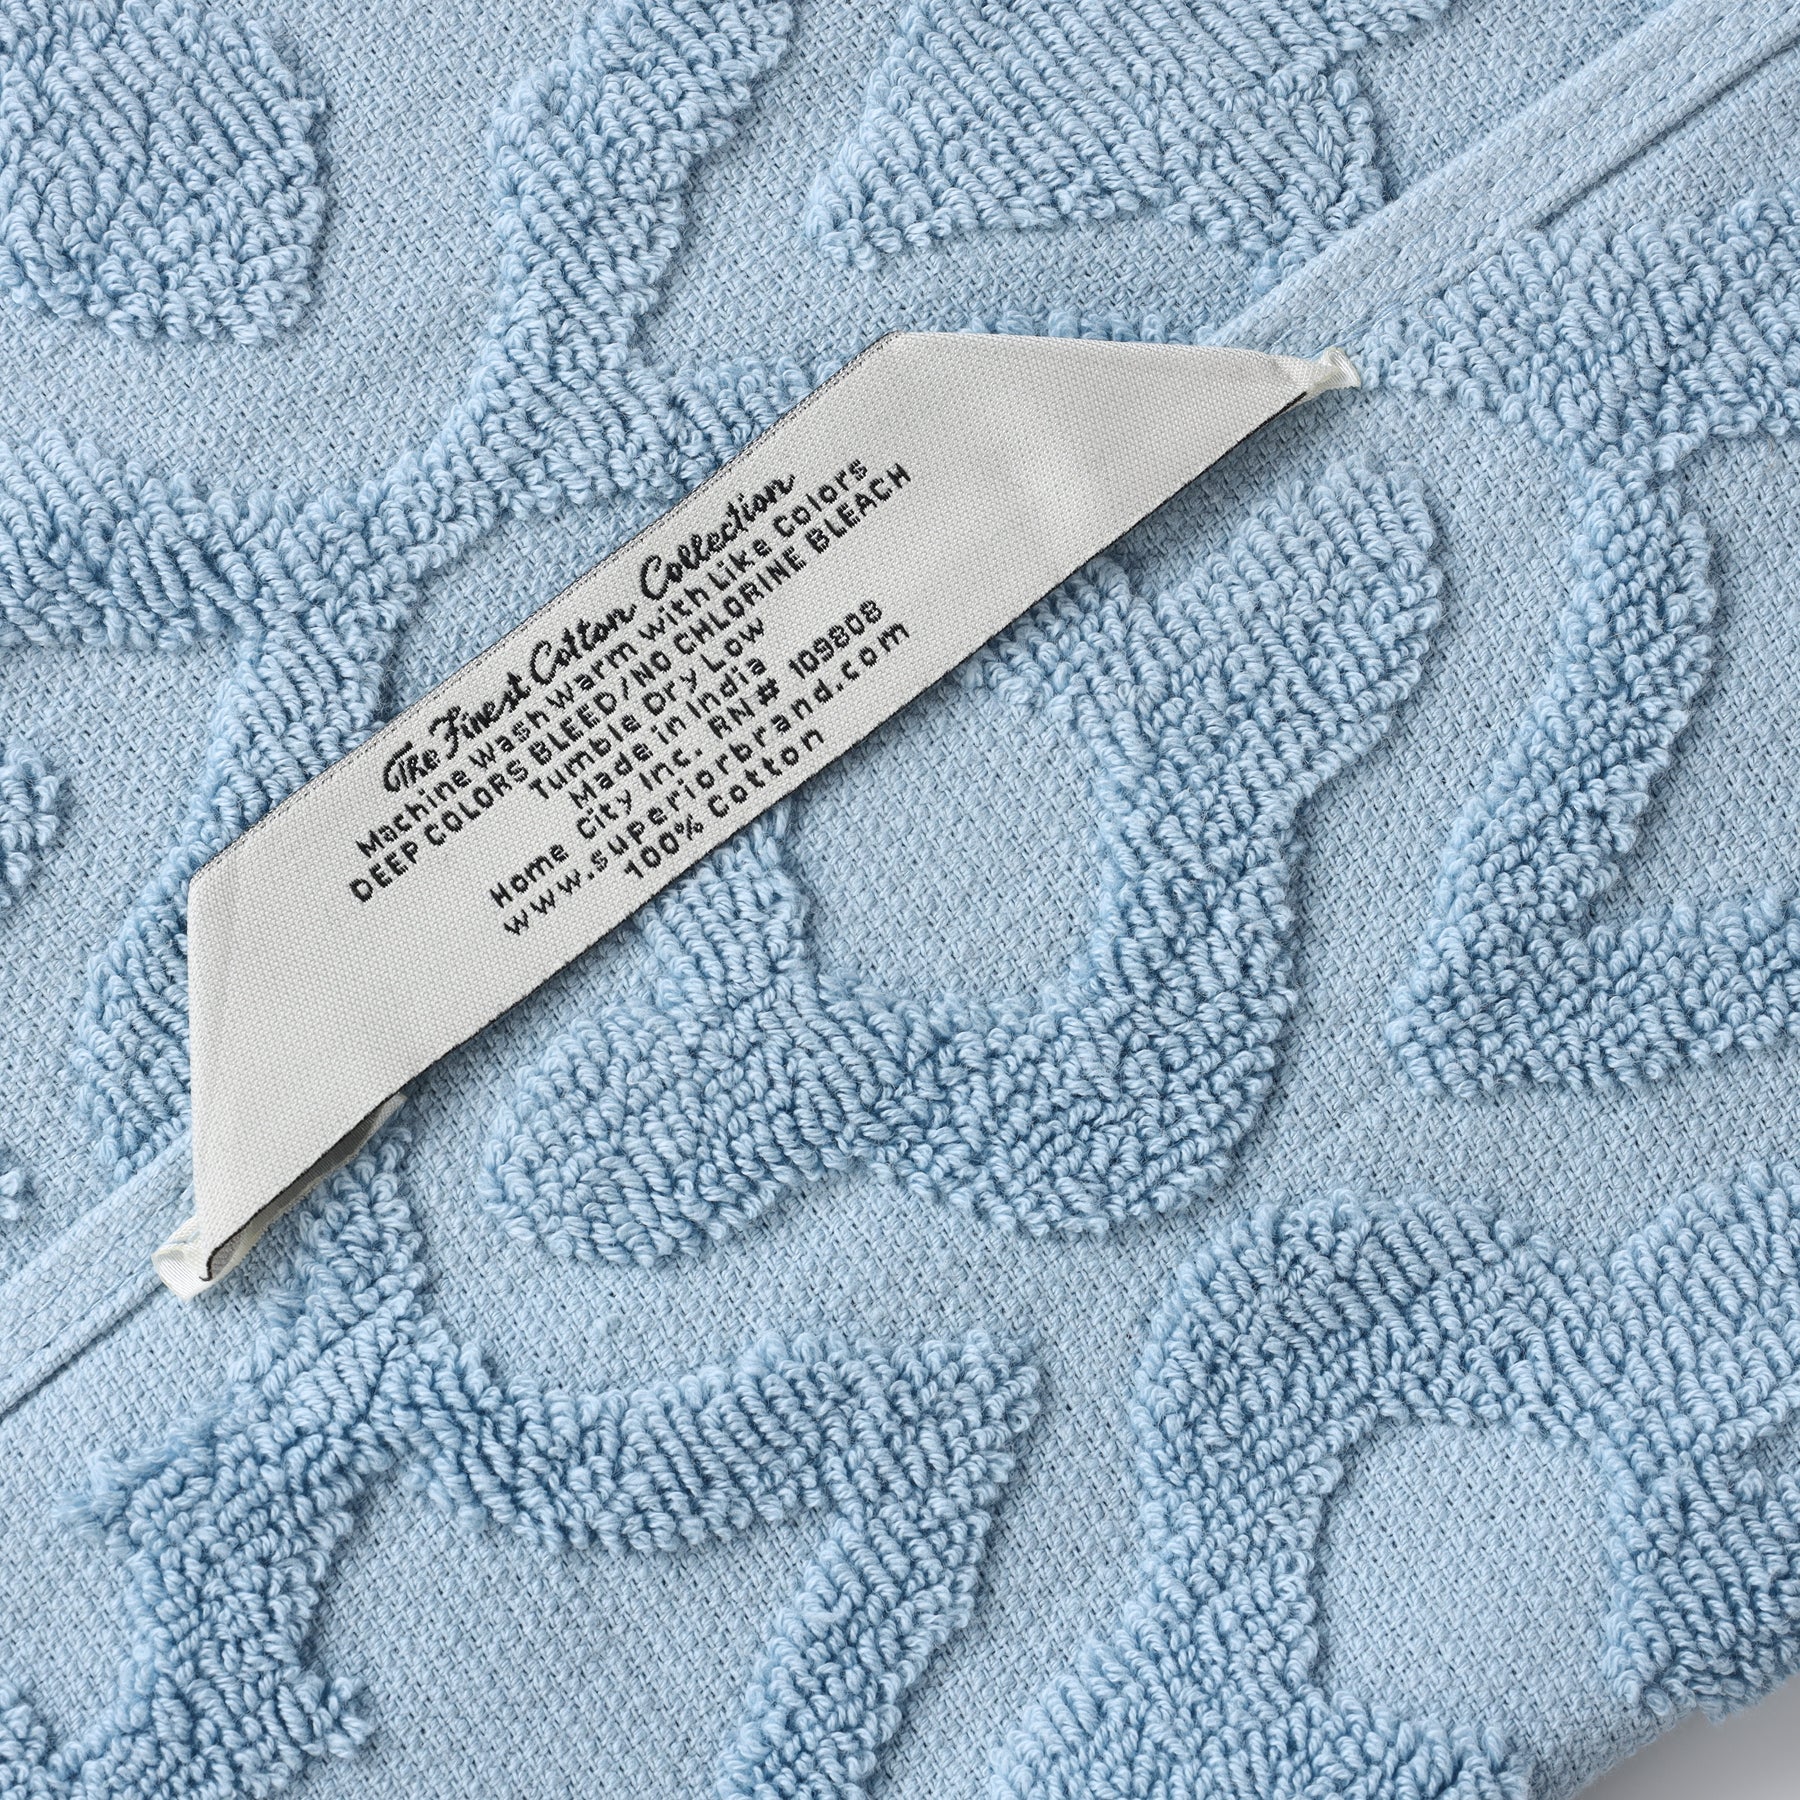 Rolla Cotton Geometric Jacquard Plush Absorbent Hand Towel - Blue